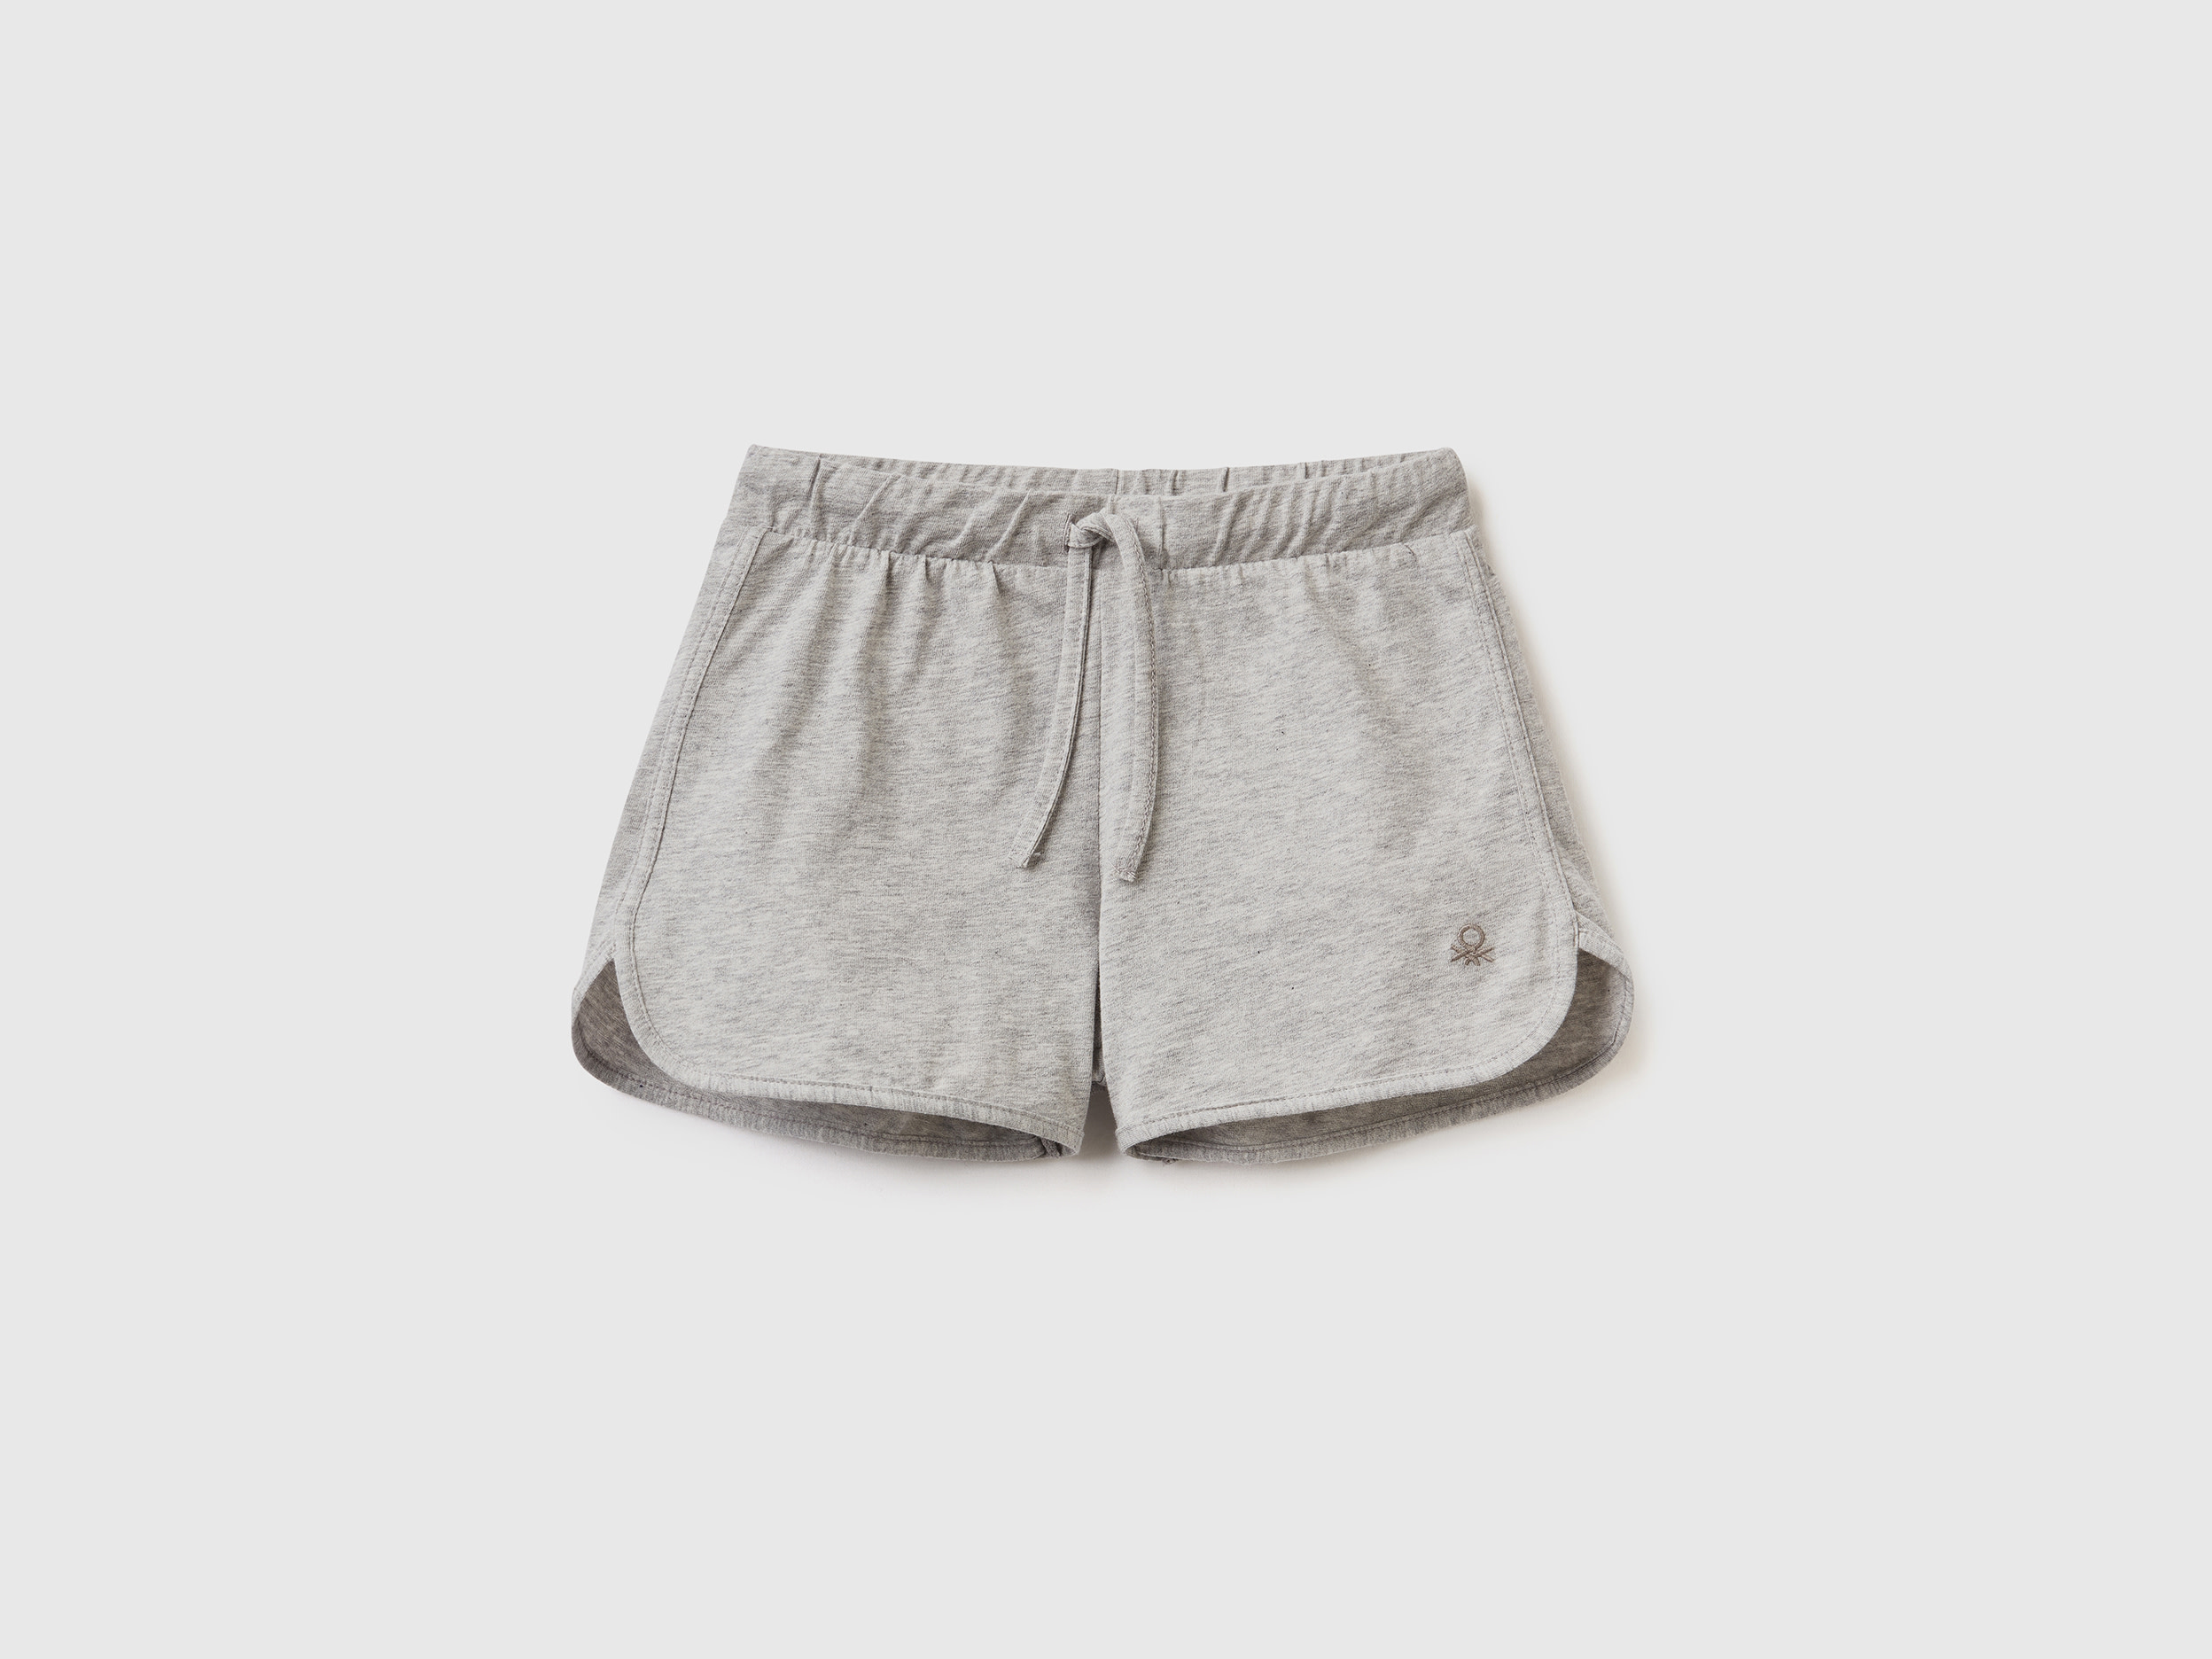 Benetton, Runner Style Shorts In Organic Cotton, size L, Light Gray, Kids